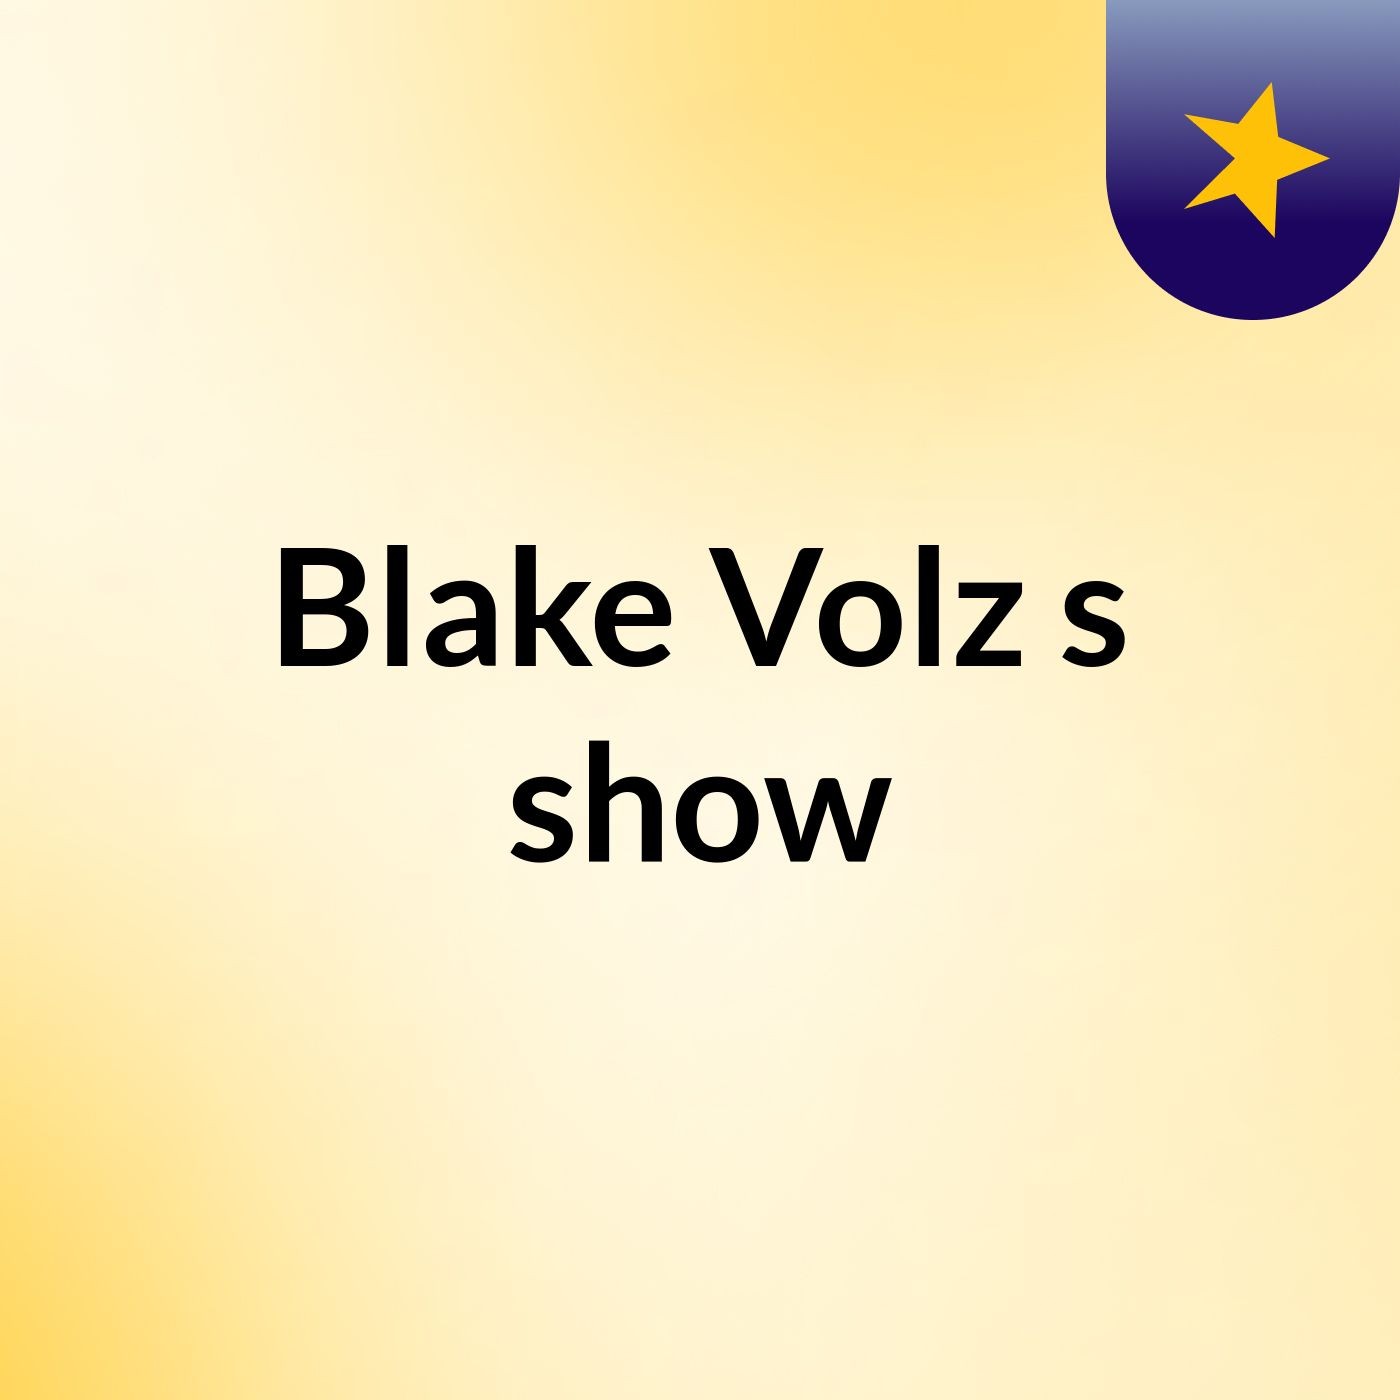 Episode 21 - Blake Volz's show